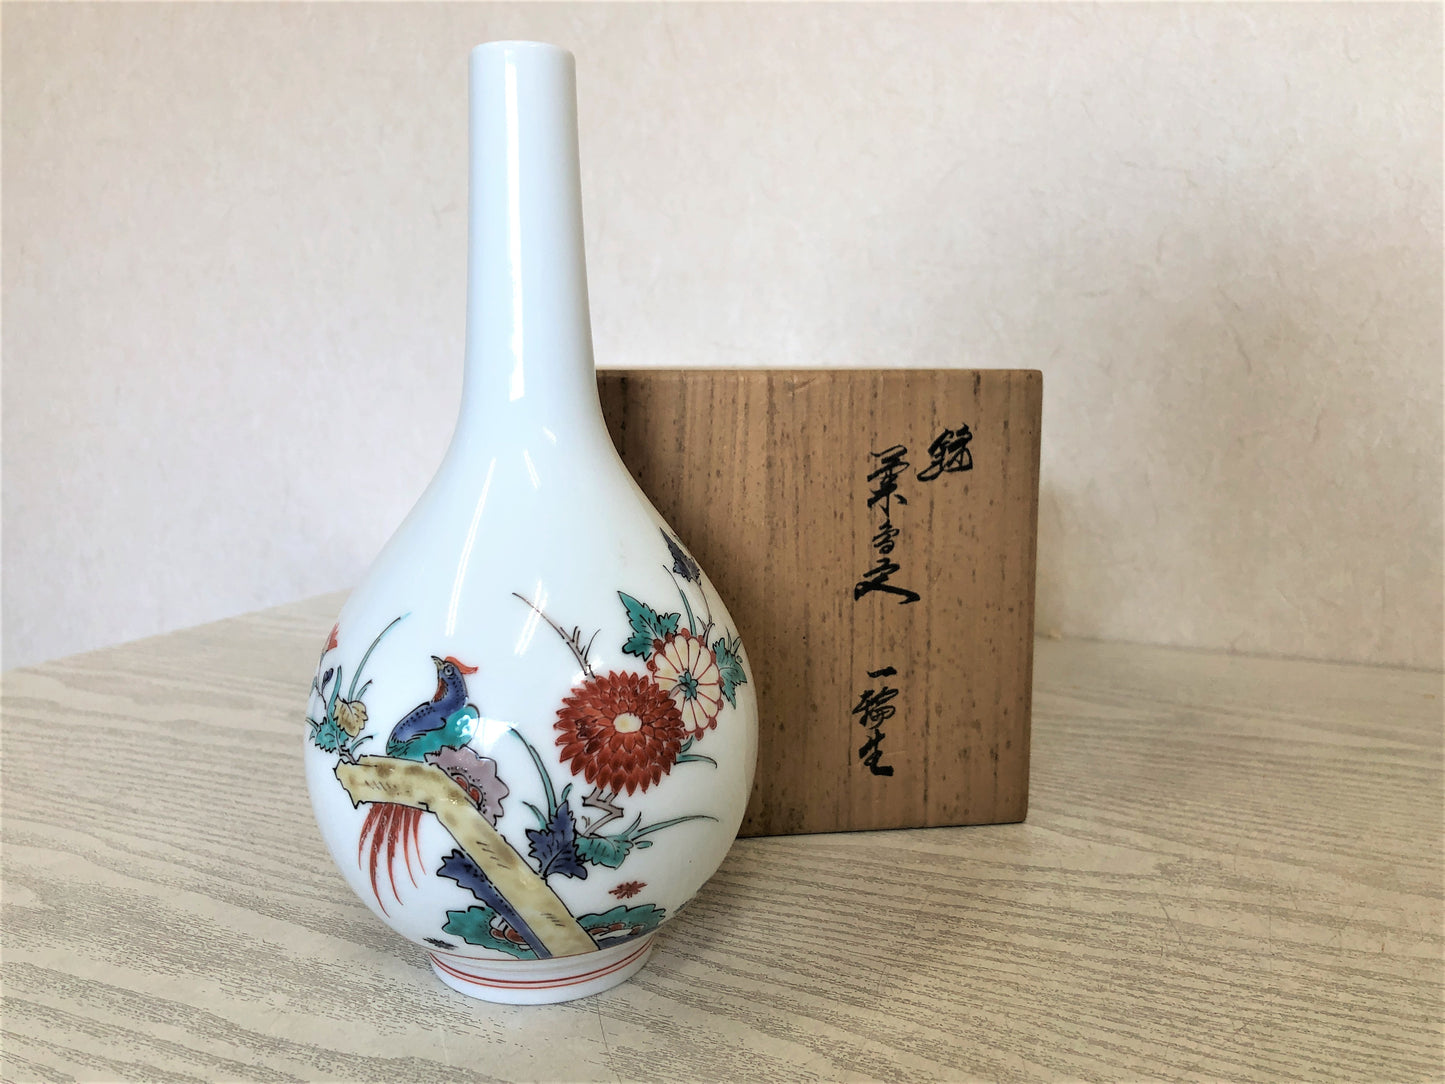 Y3813 FLOWER VASE Arita-ware signed box Japan ikebana decor interior antique